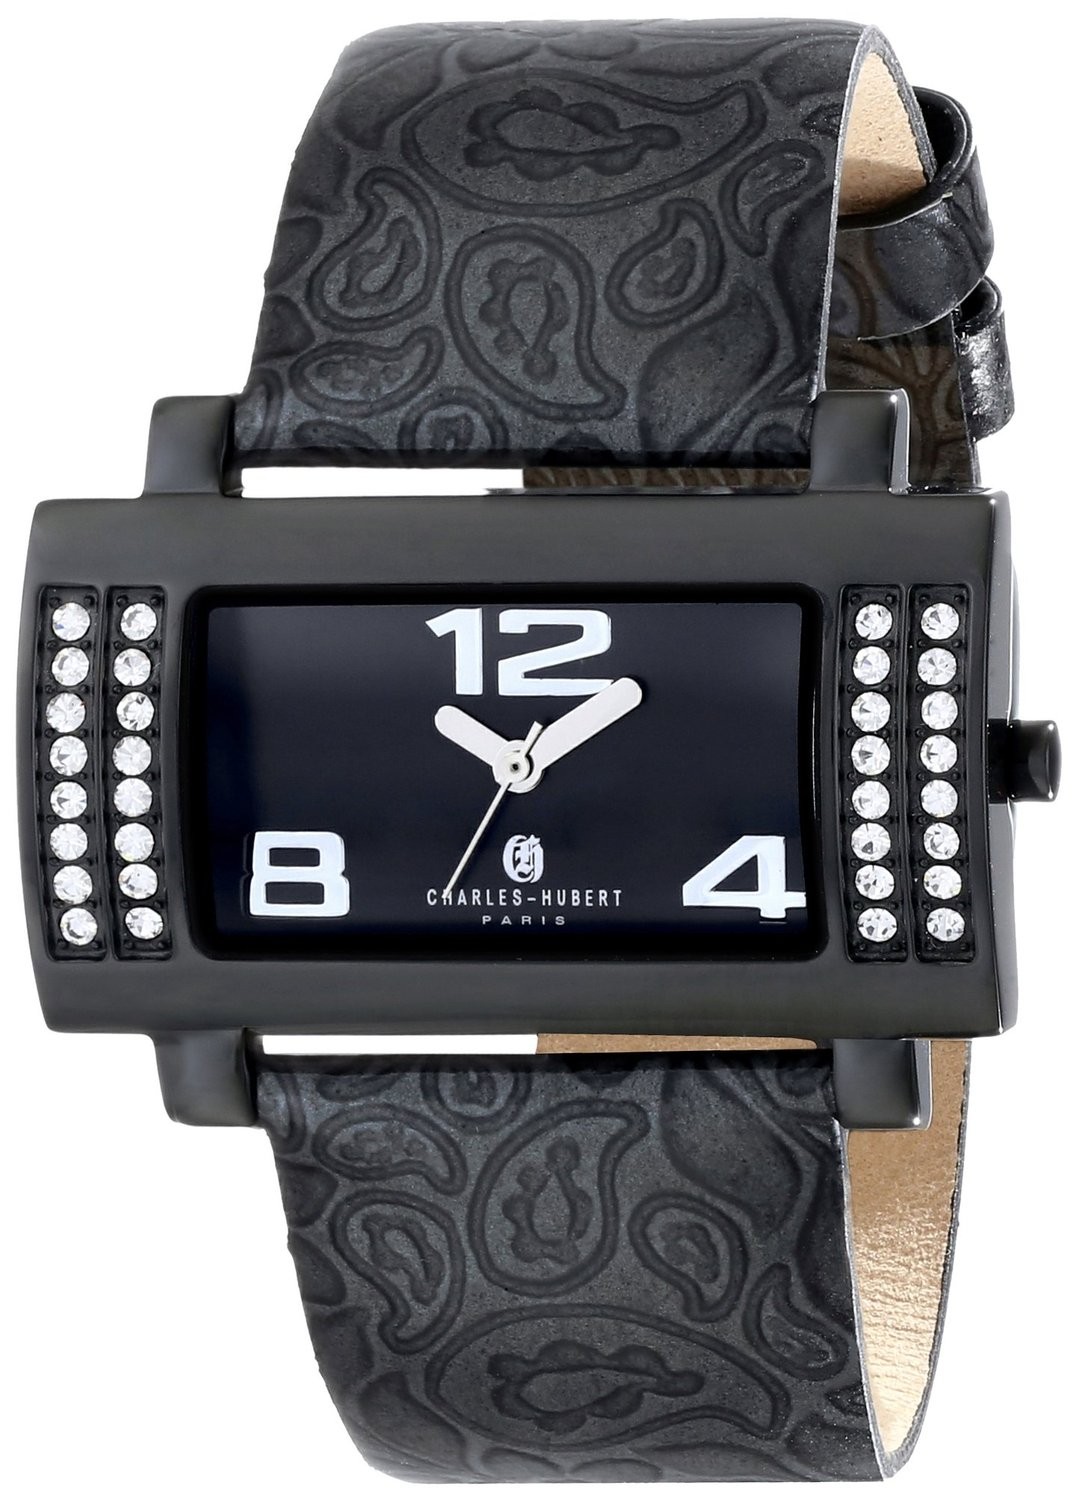 Charles-Hubert Paris Women's Black Plated Stainless Steel Quartz Watch